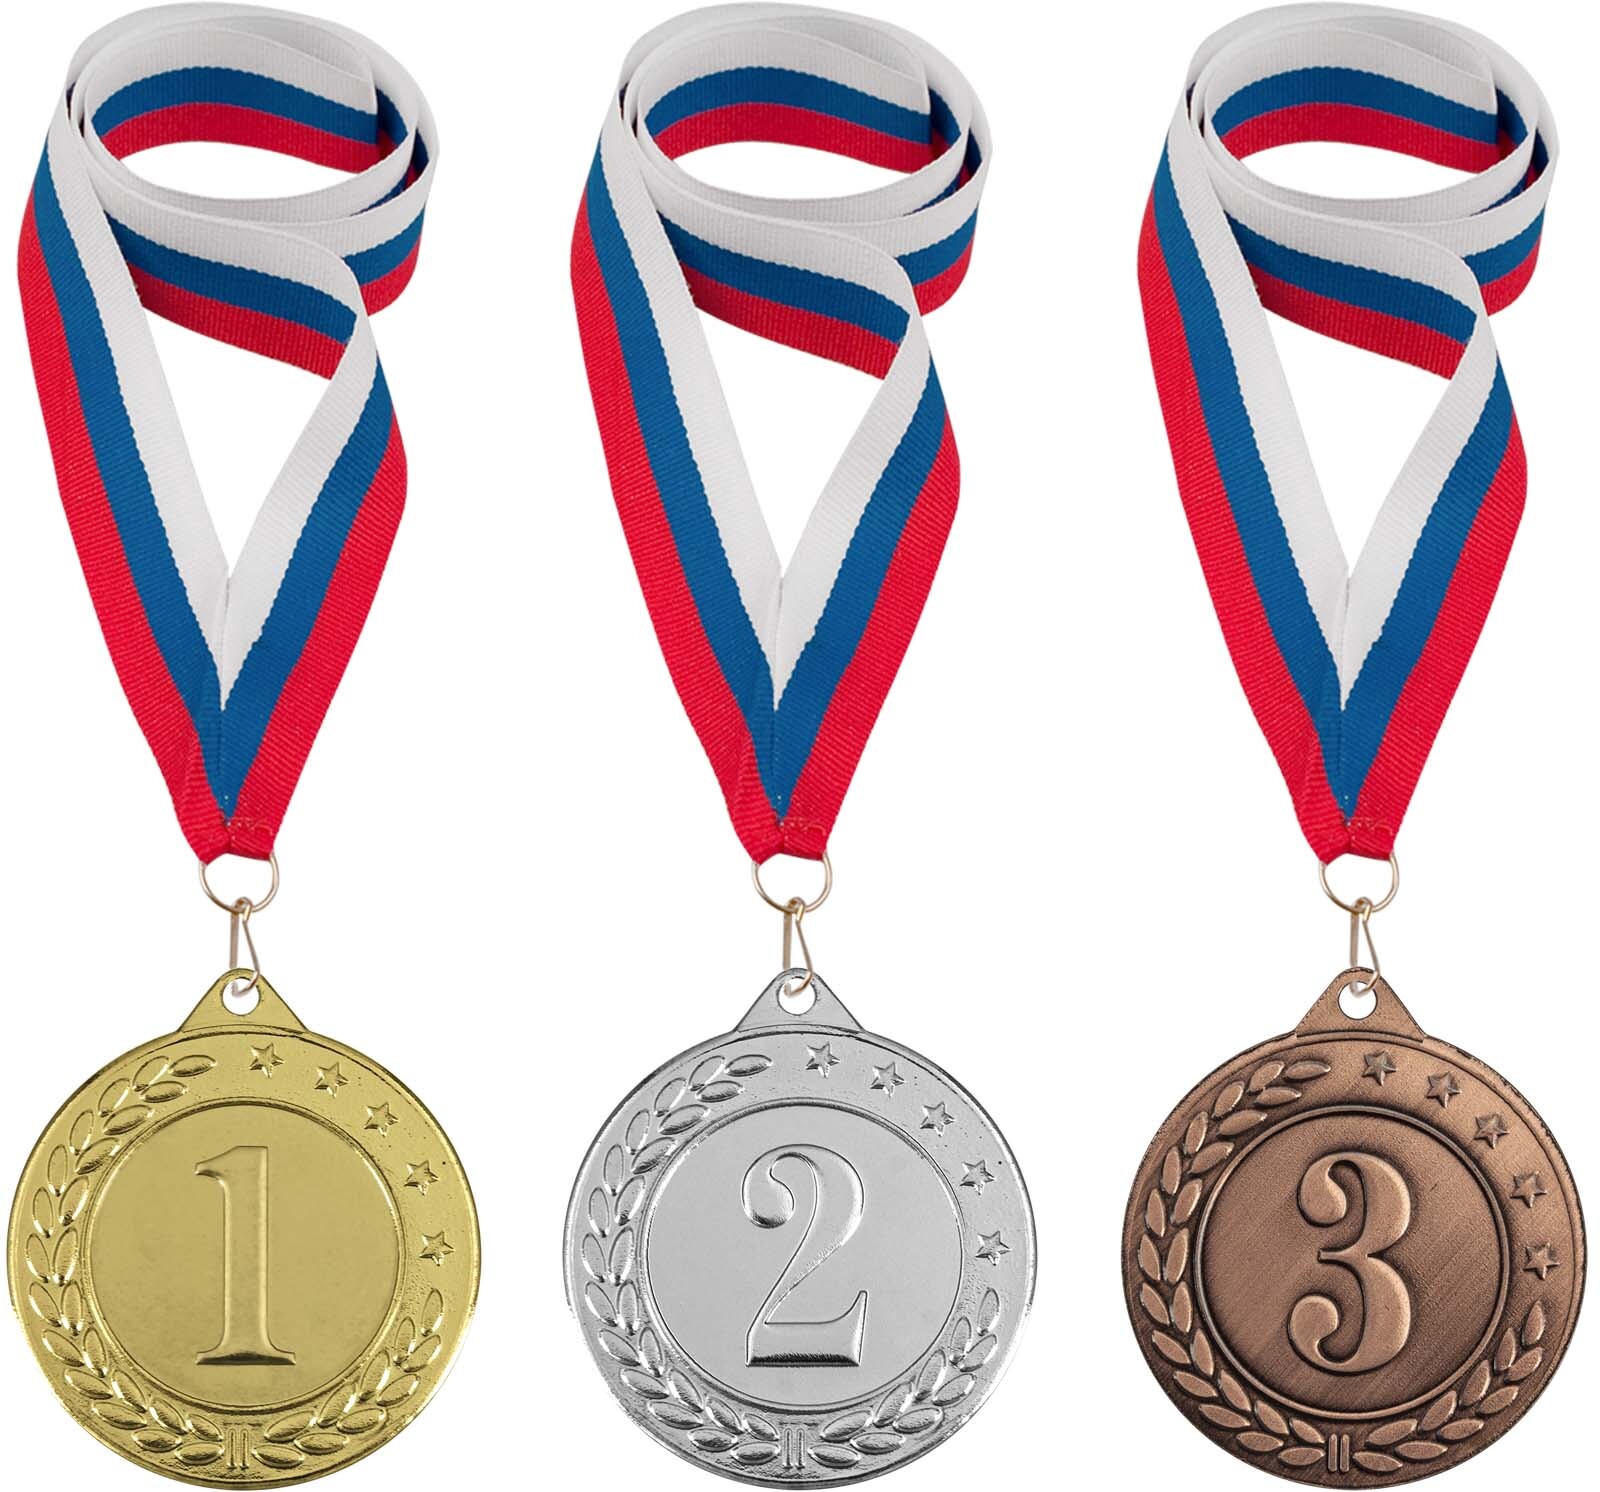 Комплекты наград. Комплект медалей mdrus802. Mk277_k4-комплект медалей. Медаль металлическая. Лента для медали.